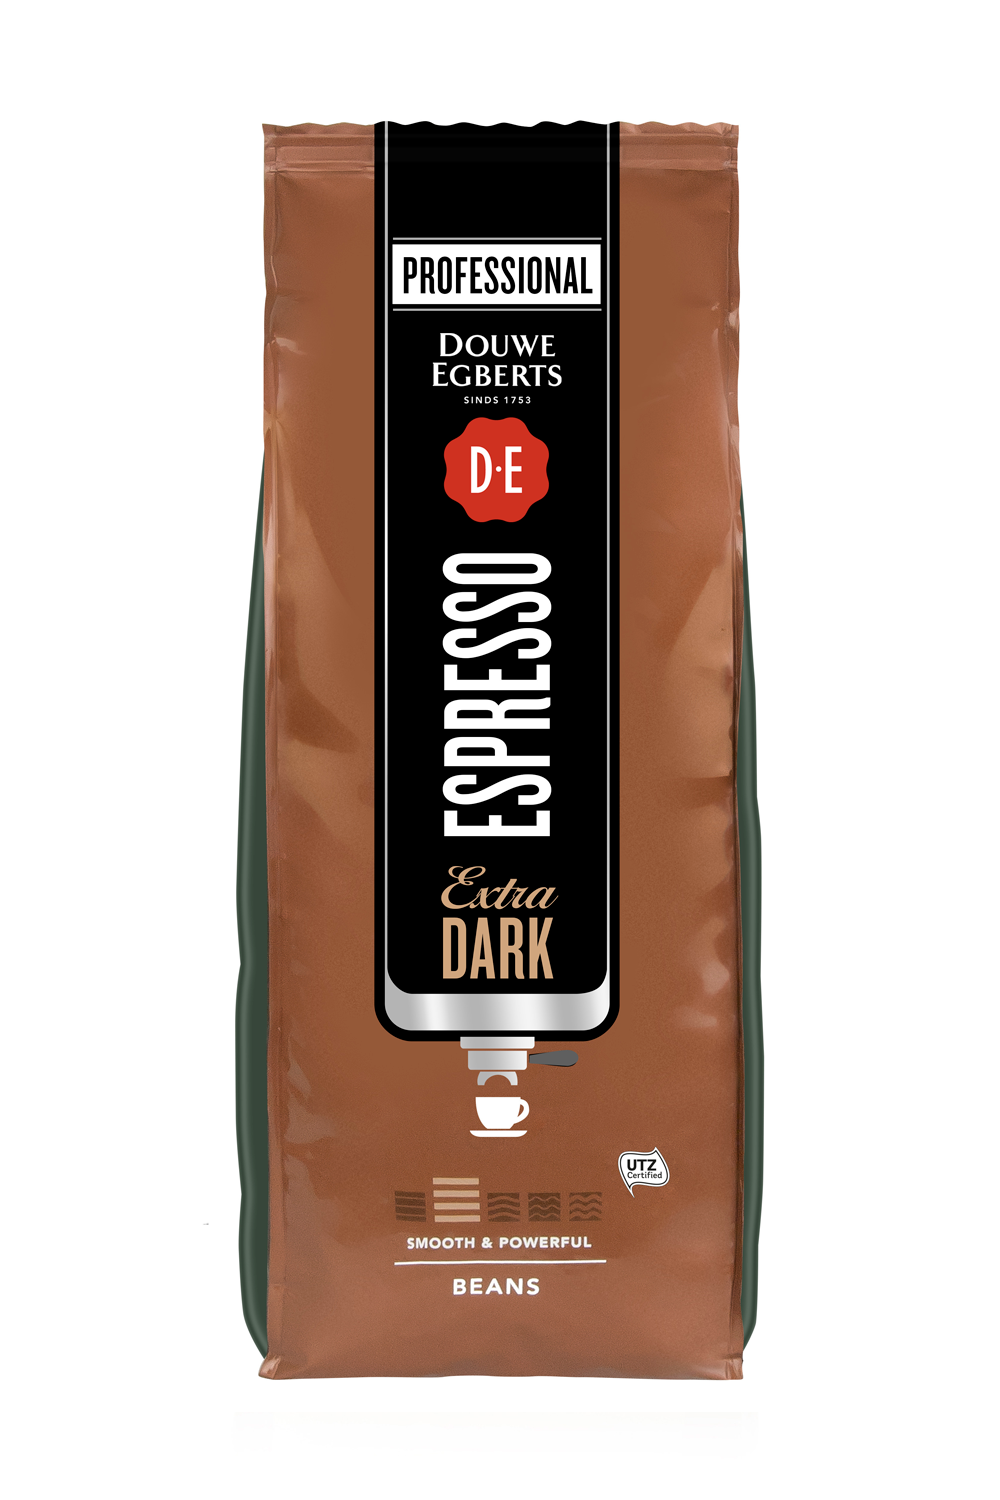 Douwe Egberts Extra Dark UTZ Espresso Coffee Beans 1kg